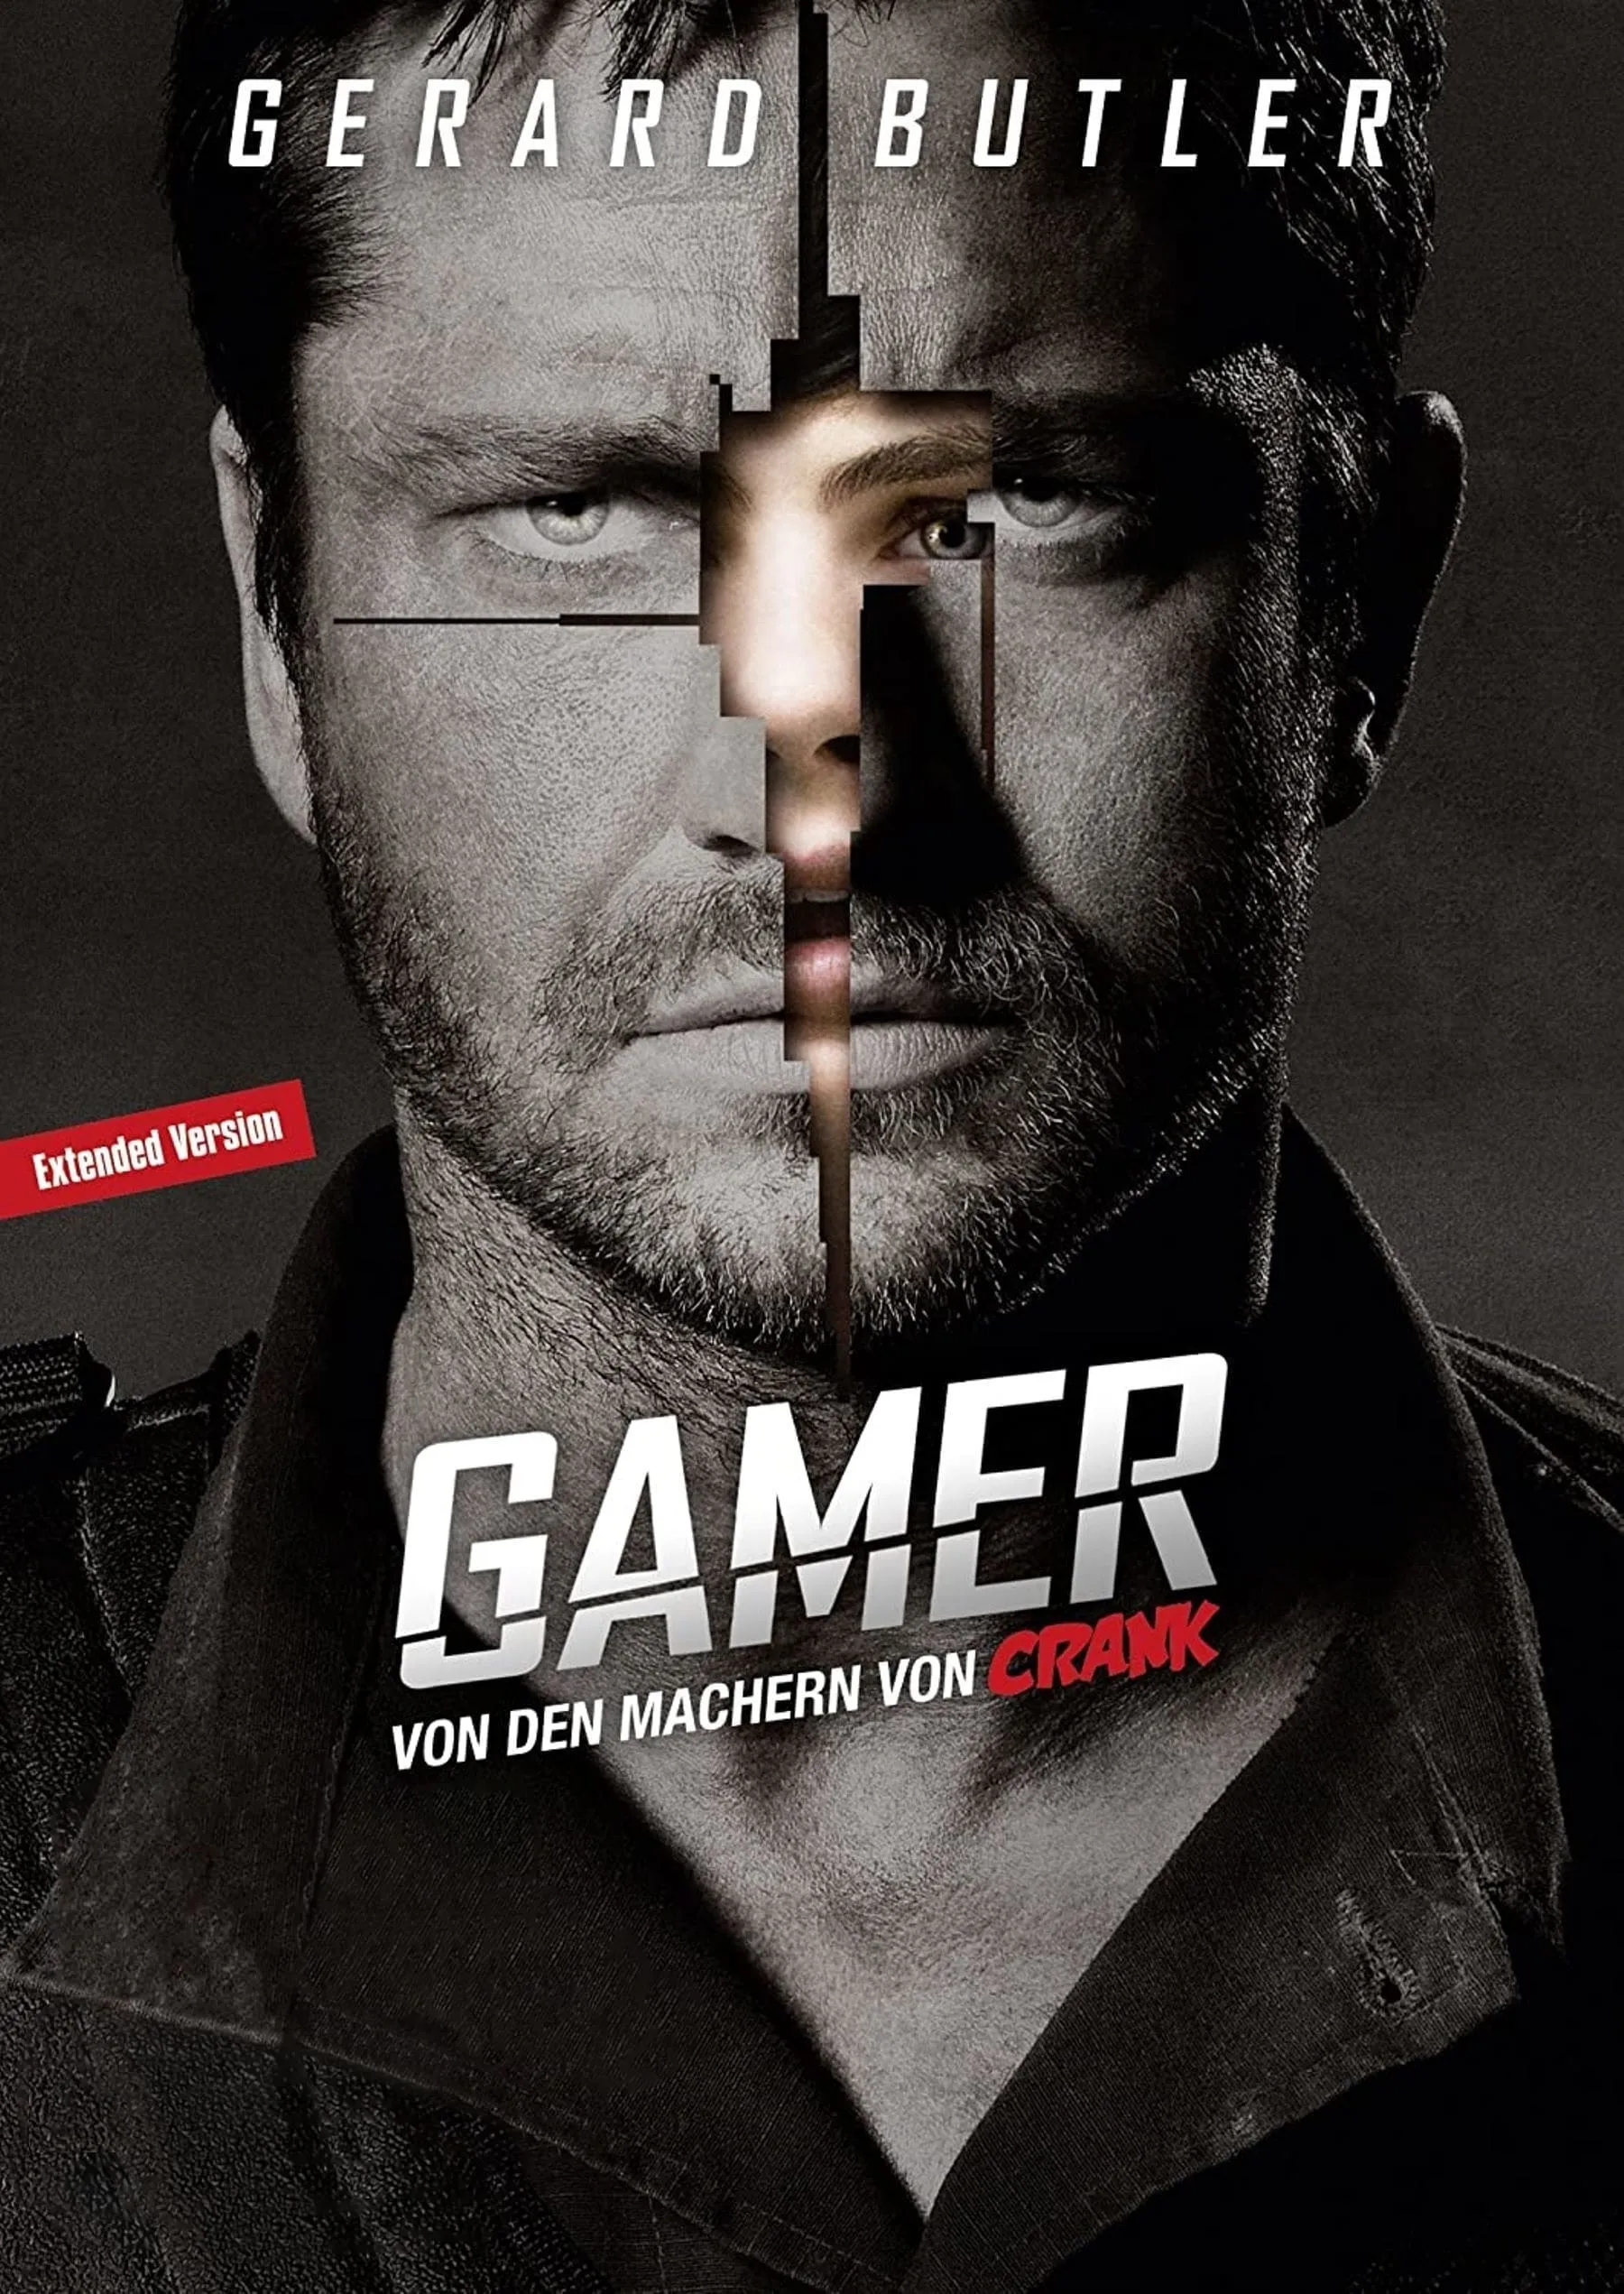 Gamer (2009) at an AMC Theatre near you.